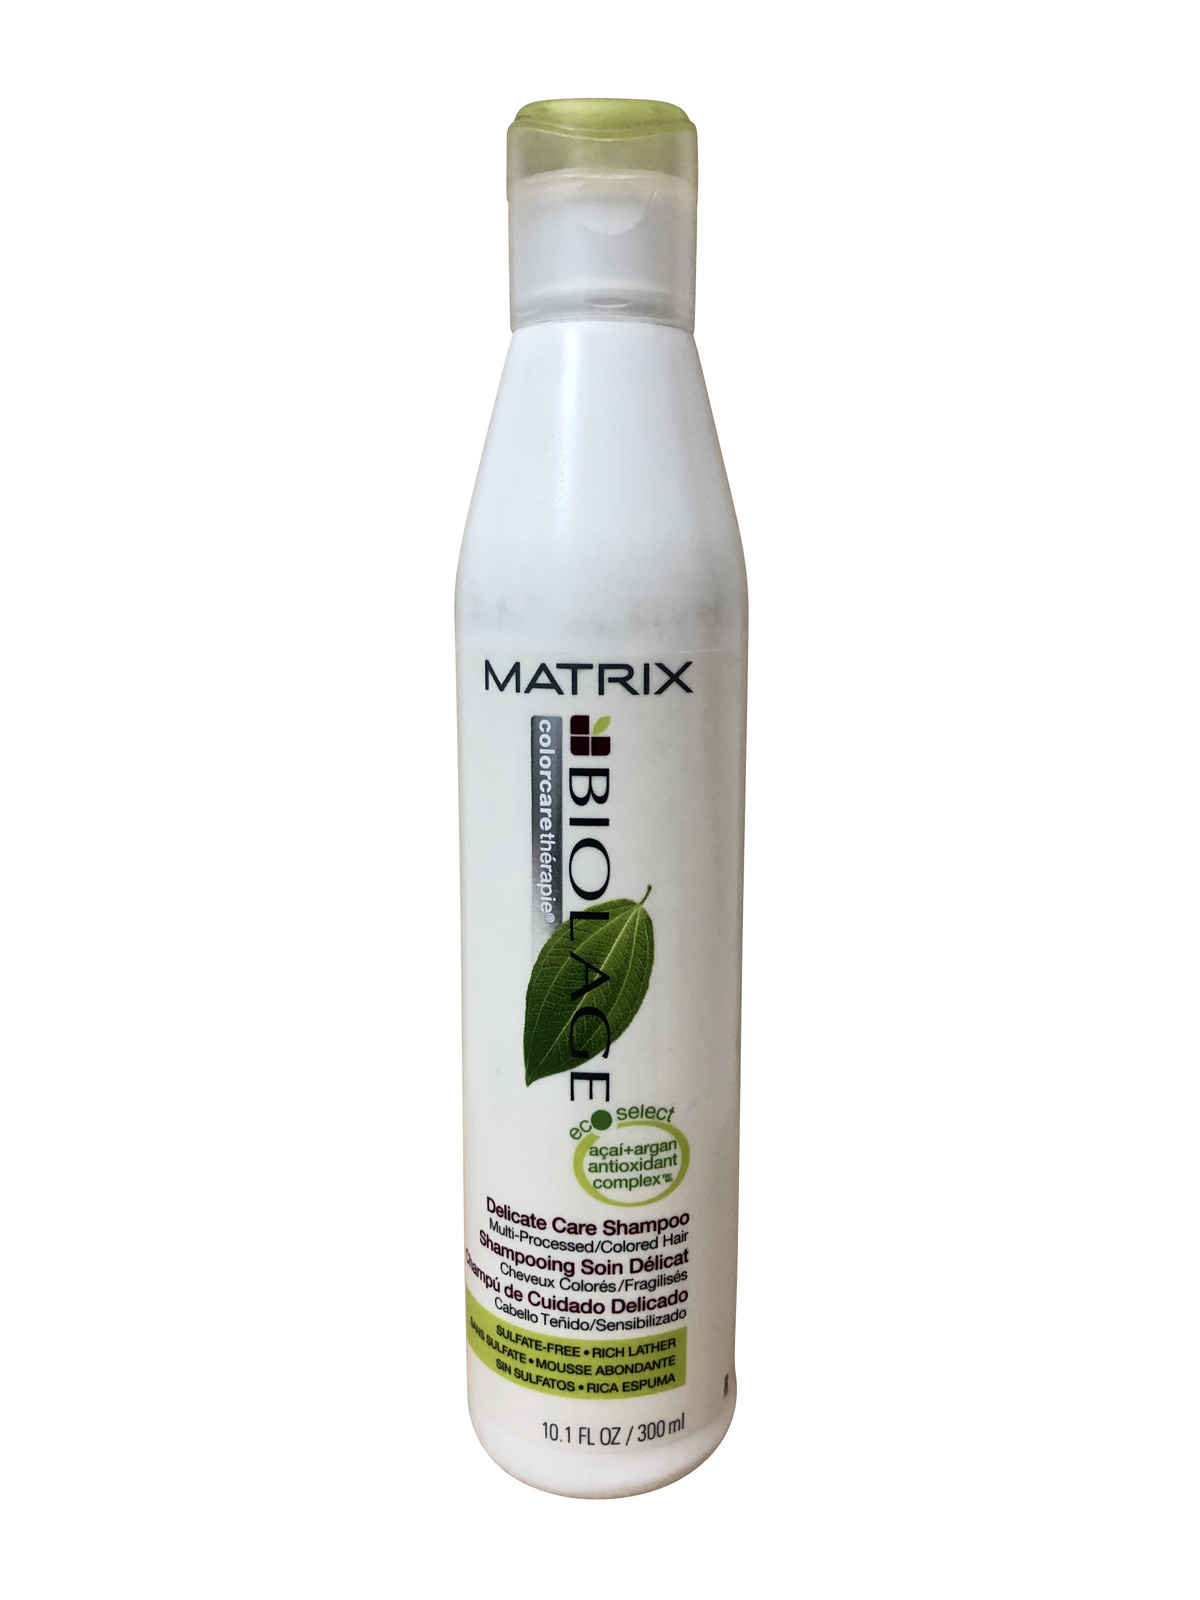 Matrix Biolage Delicate Care Shampoo Color Treated Hair 10.1 oz. - $9.48